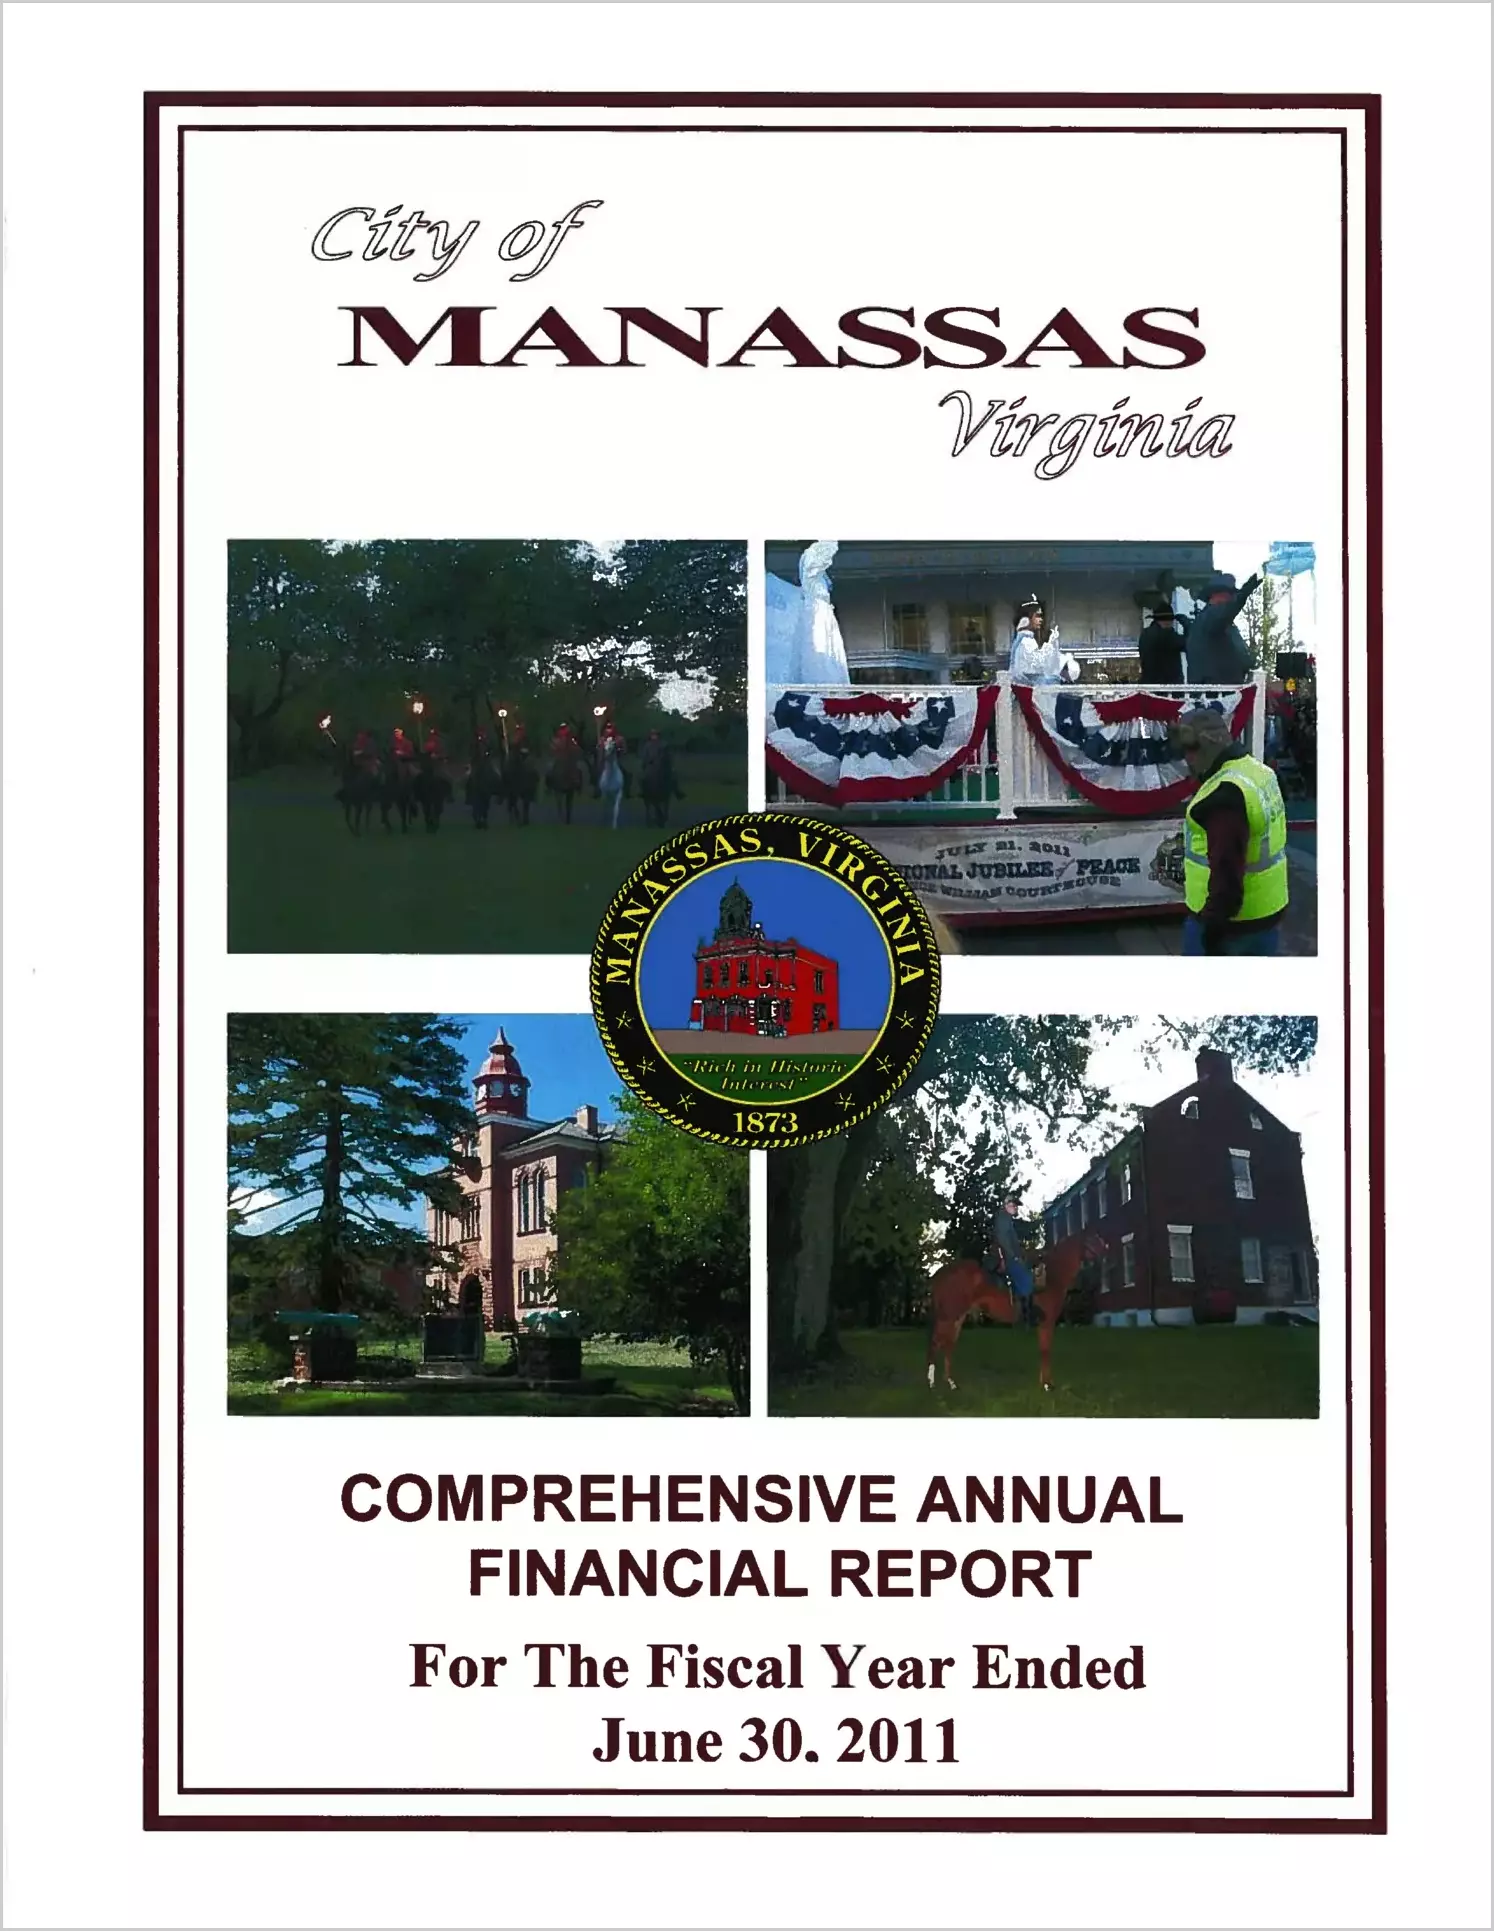 2011 Annual Financial Report for City of Manassas